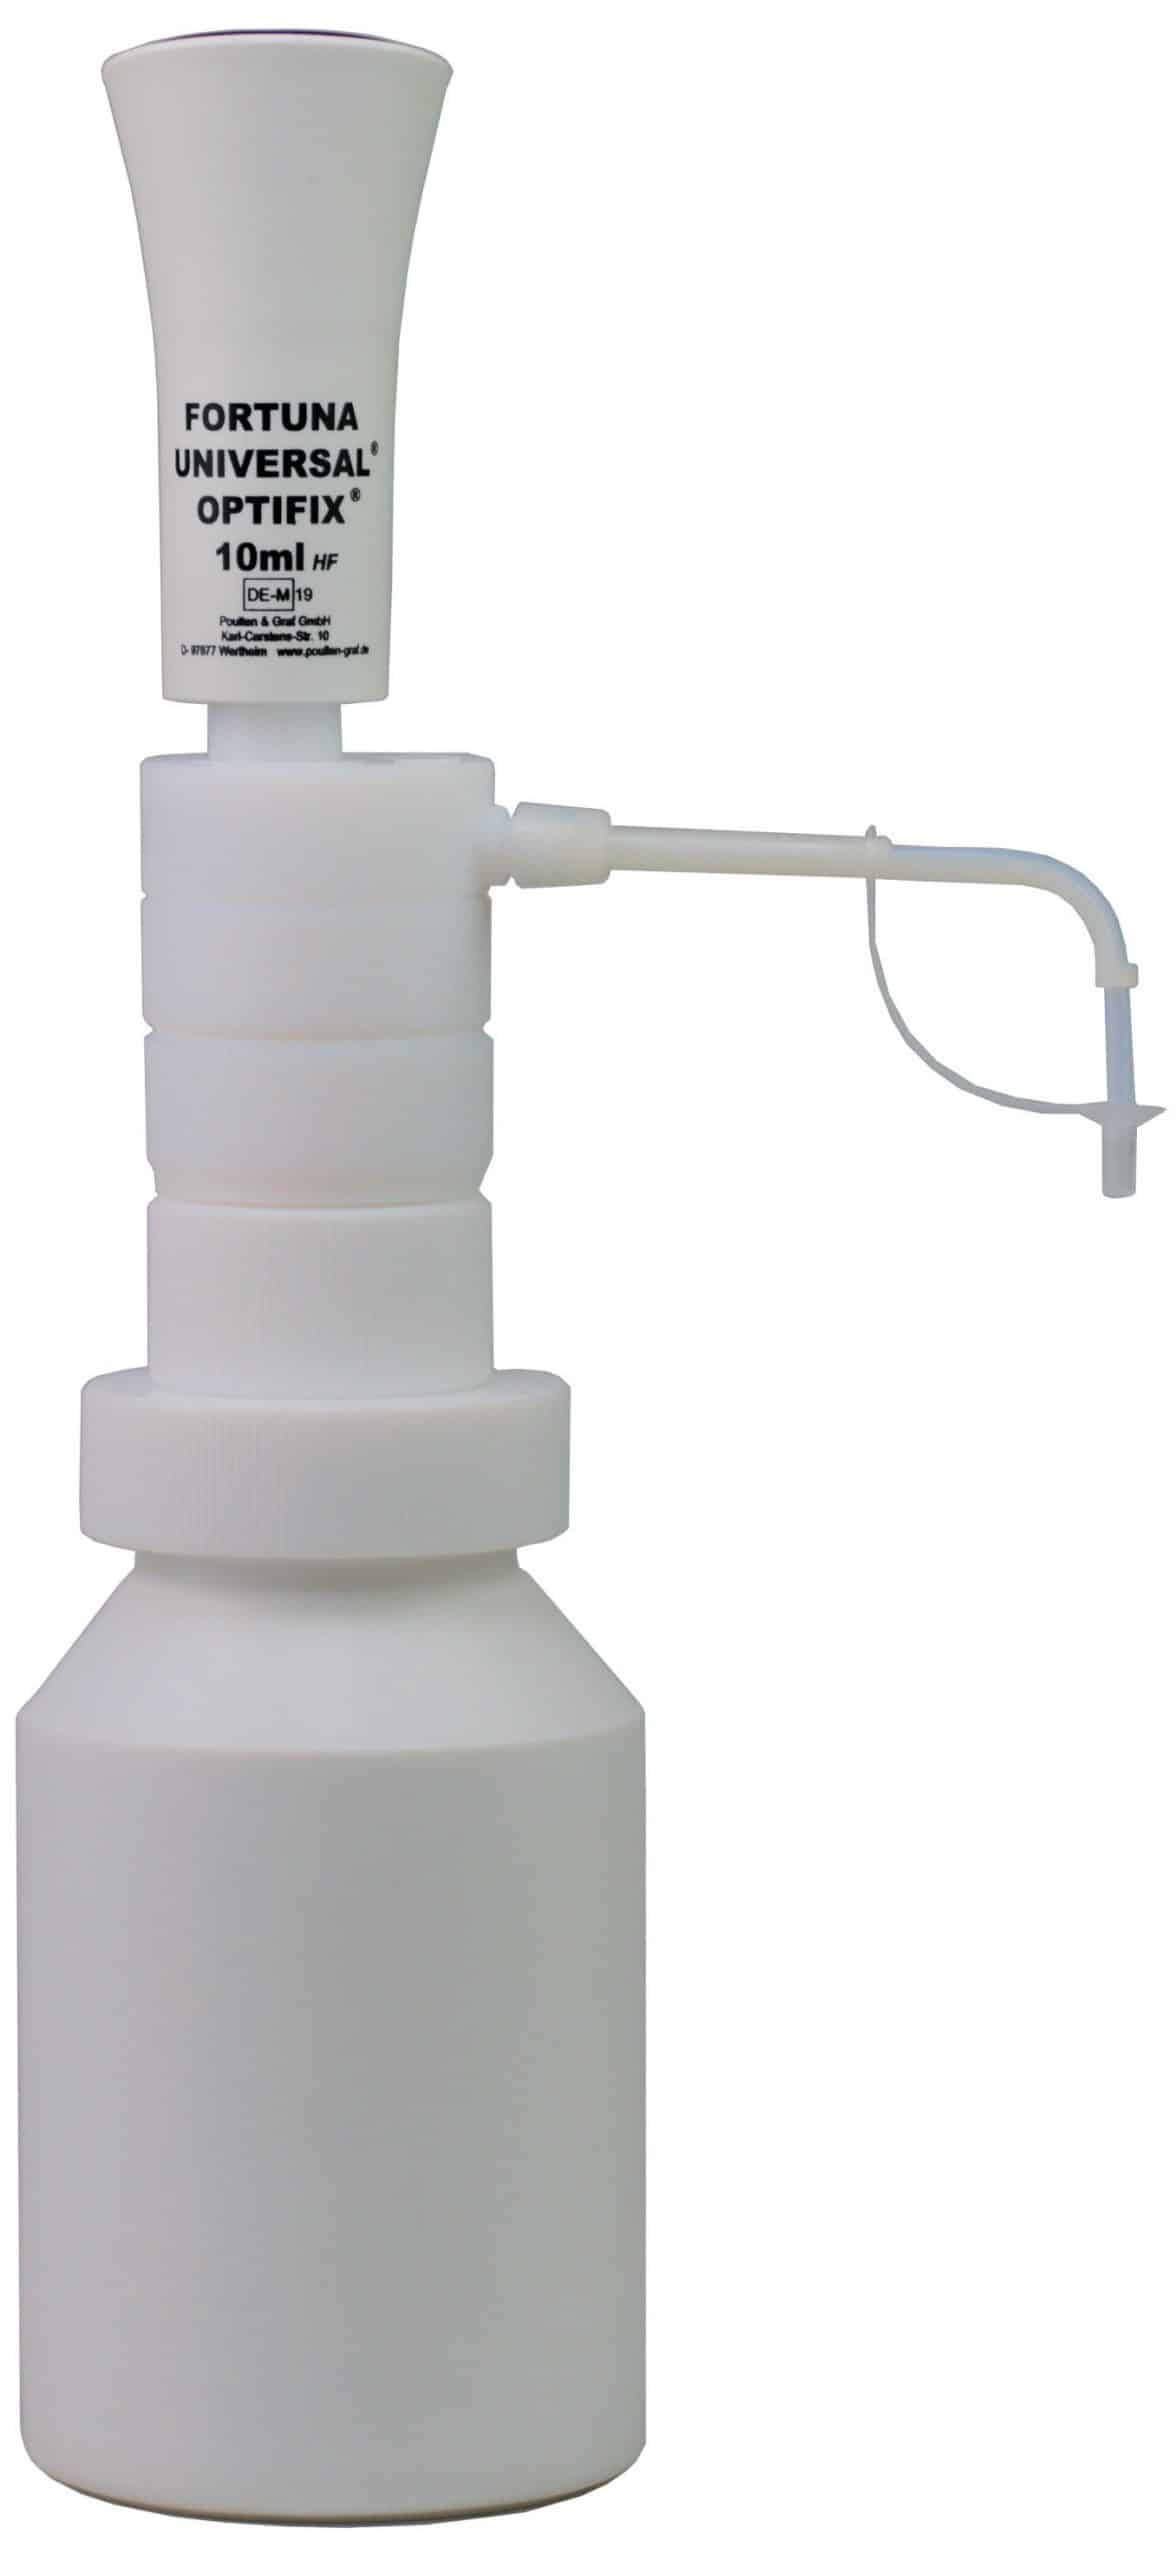 FORTUNA Bottle Top Dispenser(Germany) Universal & for Hydrofluoric Acid, 2-10ml/S